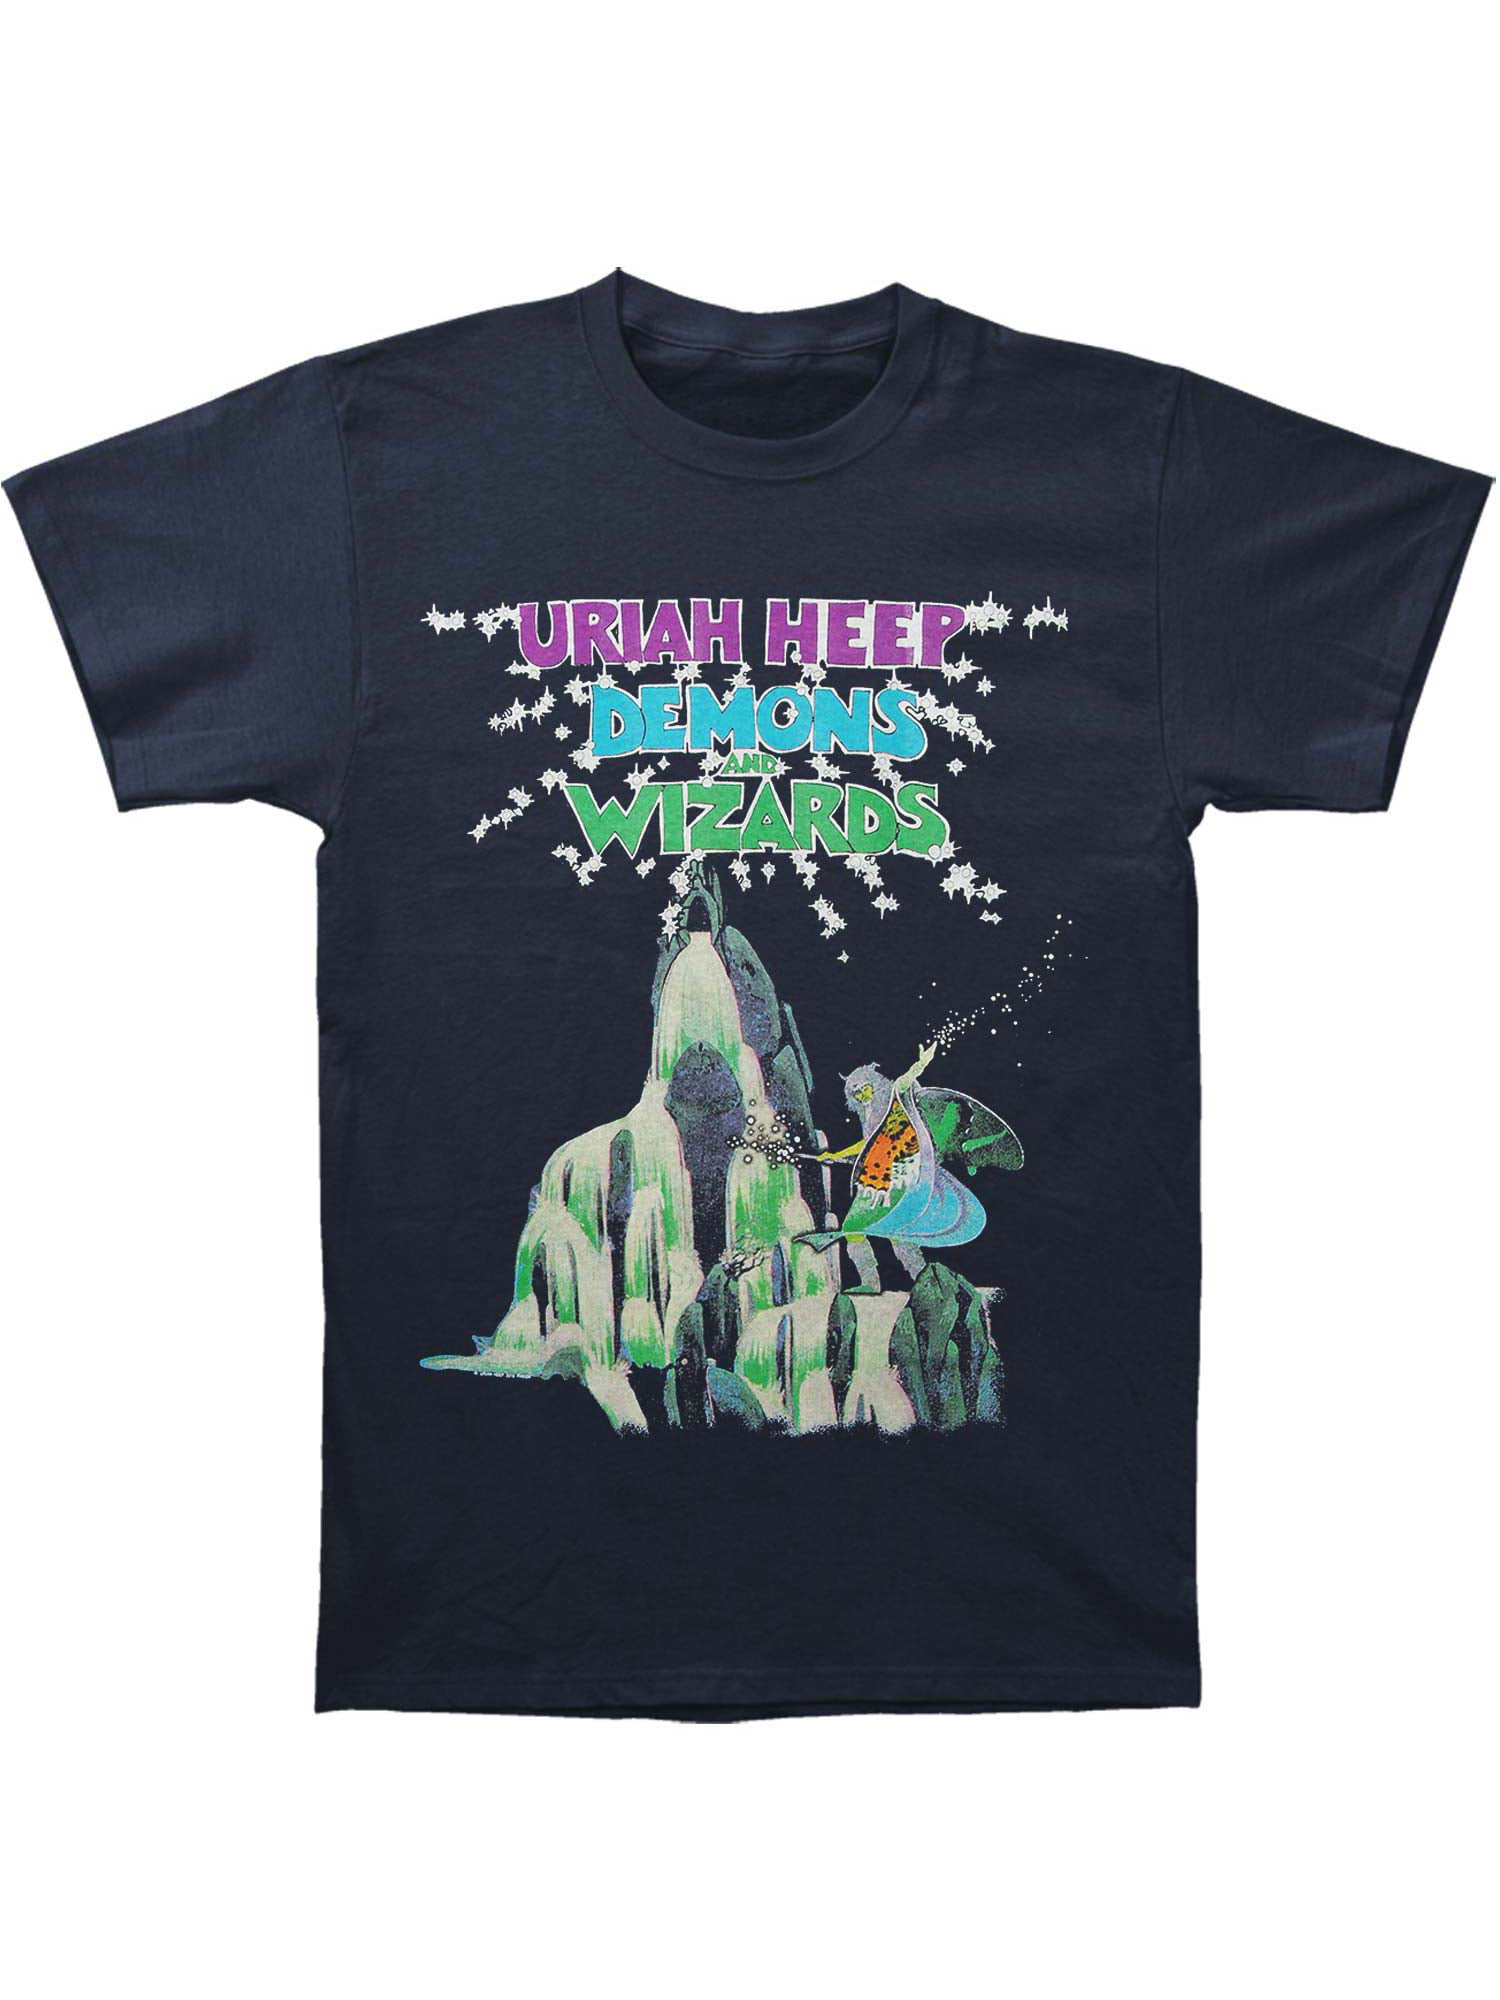 Uriah Heep Men's Demons And Wizards T-shirt Navy - Walmart.com